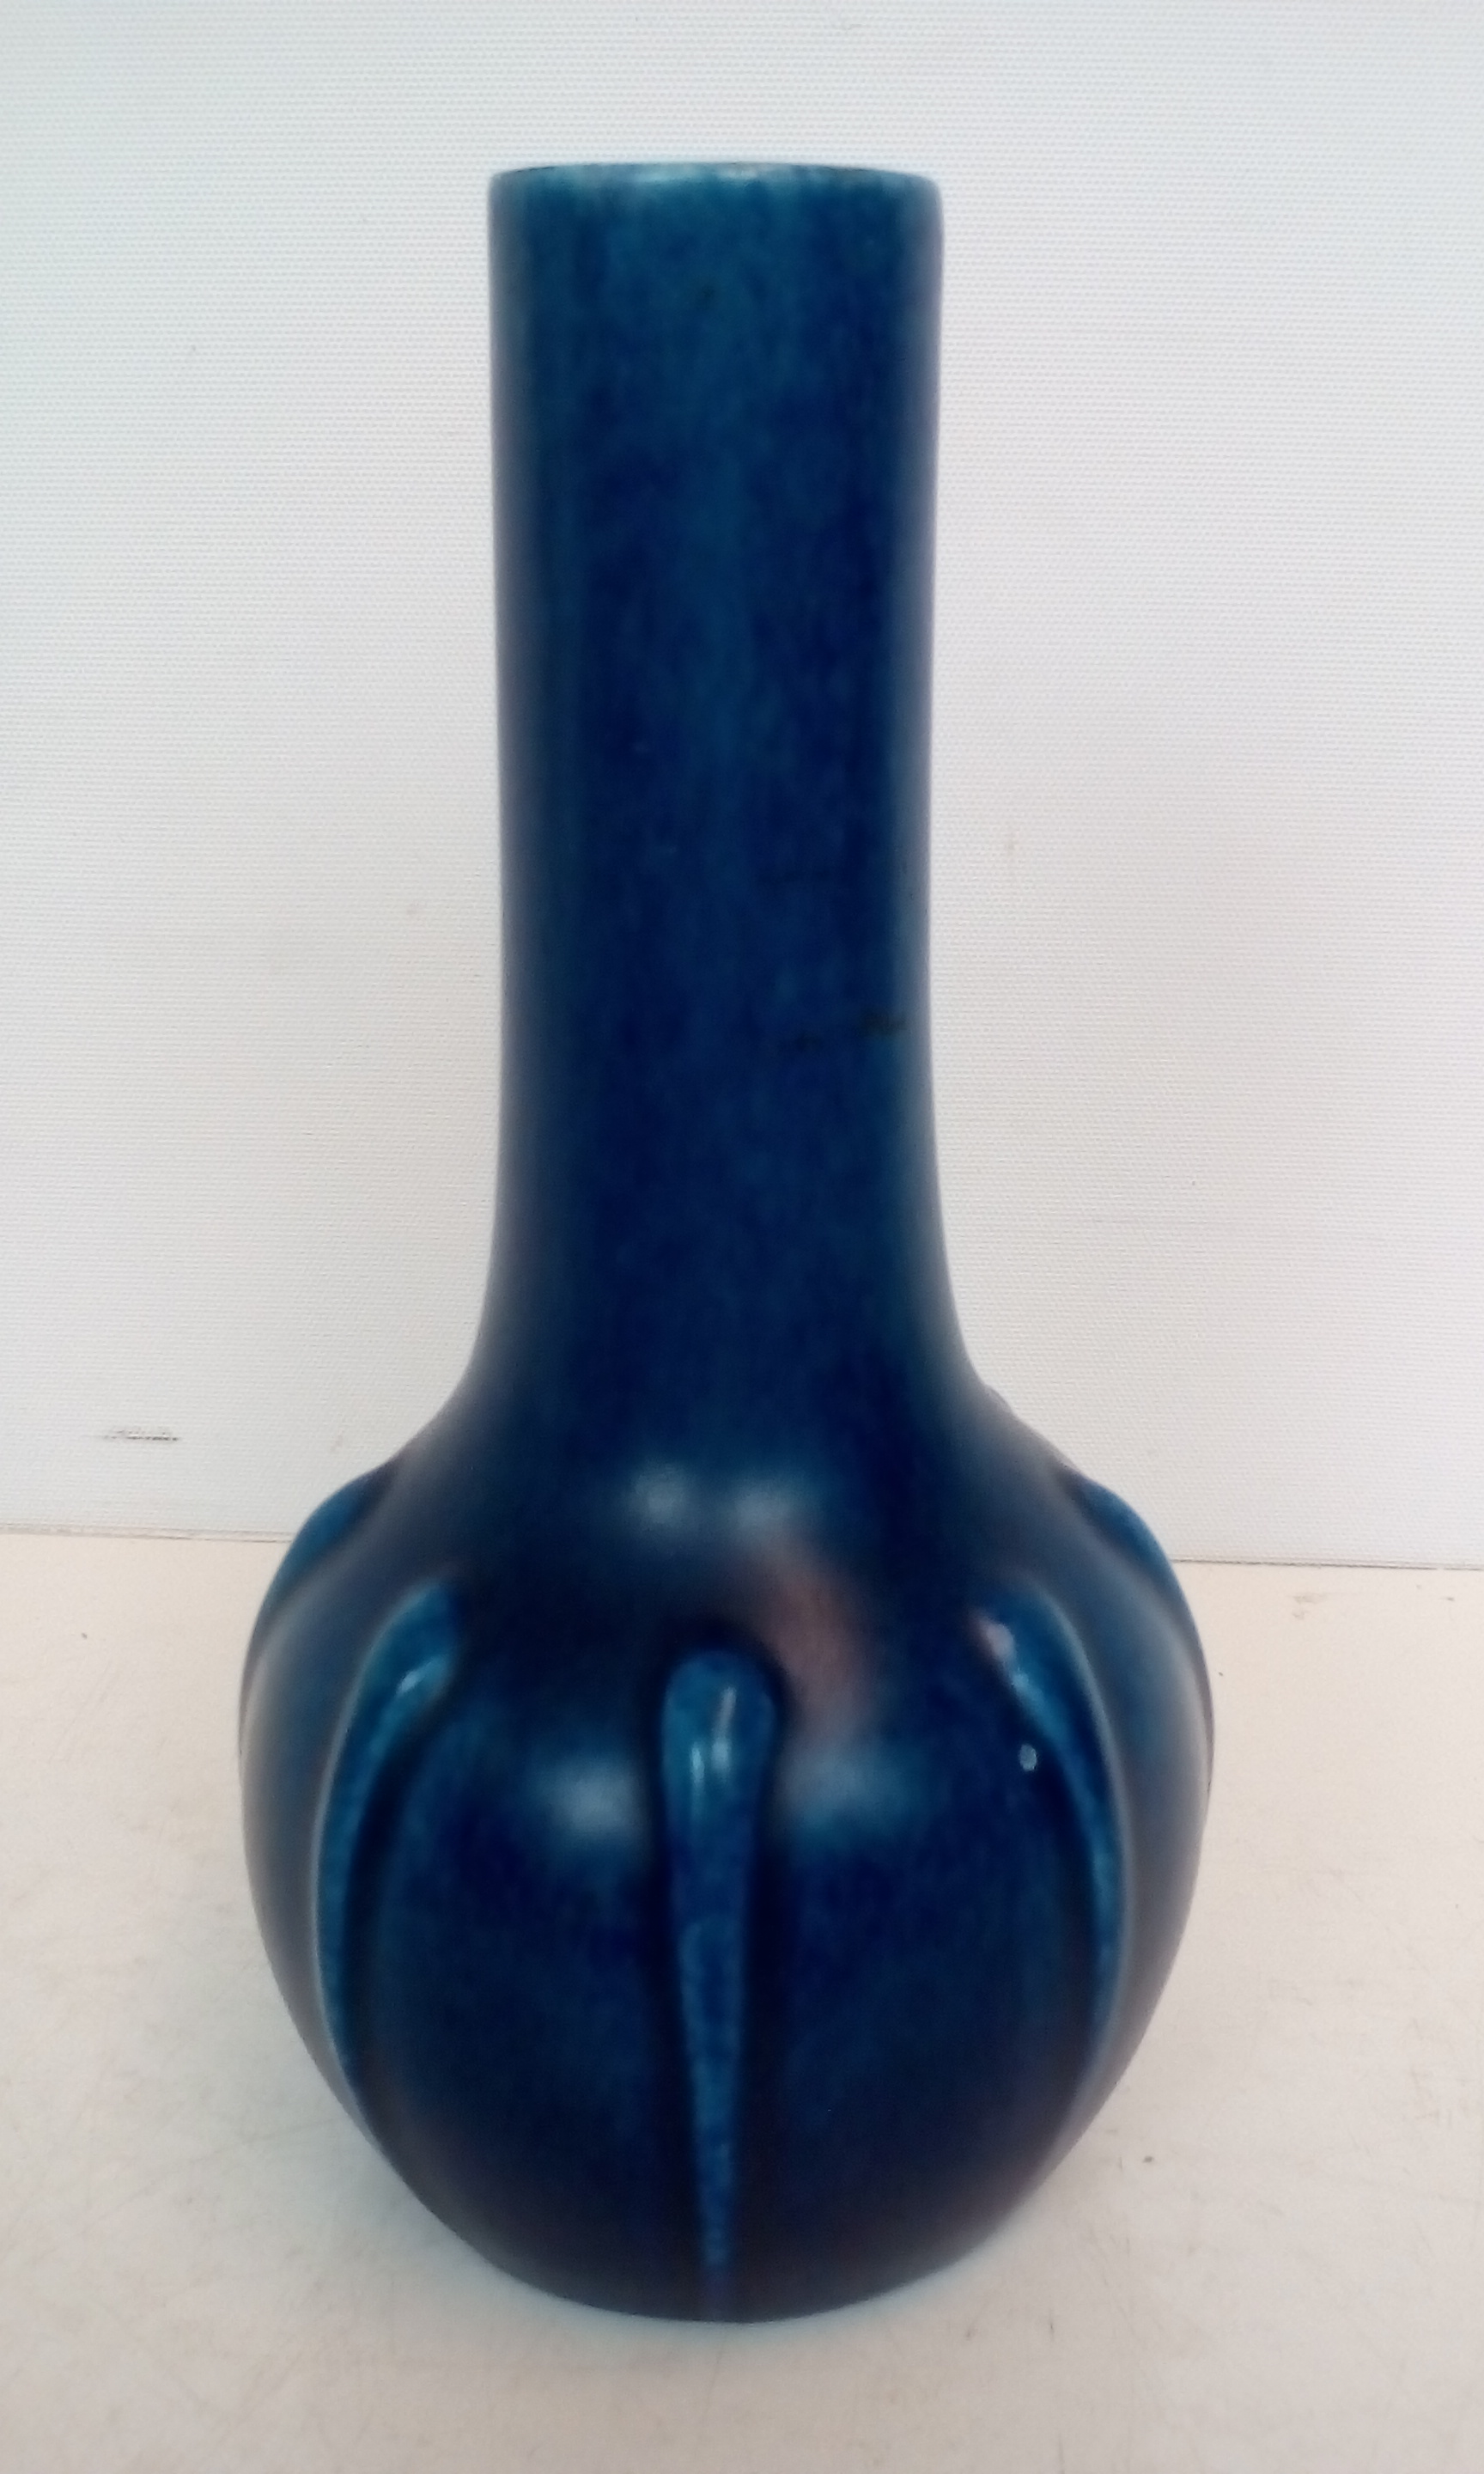 Royal Lancastrian vase, minor repair to rim, heigh